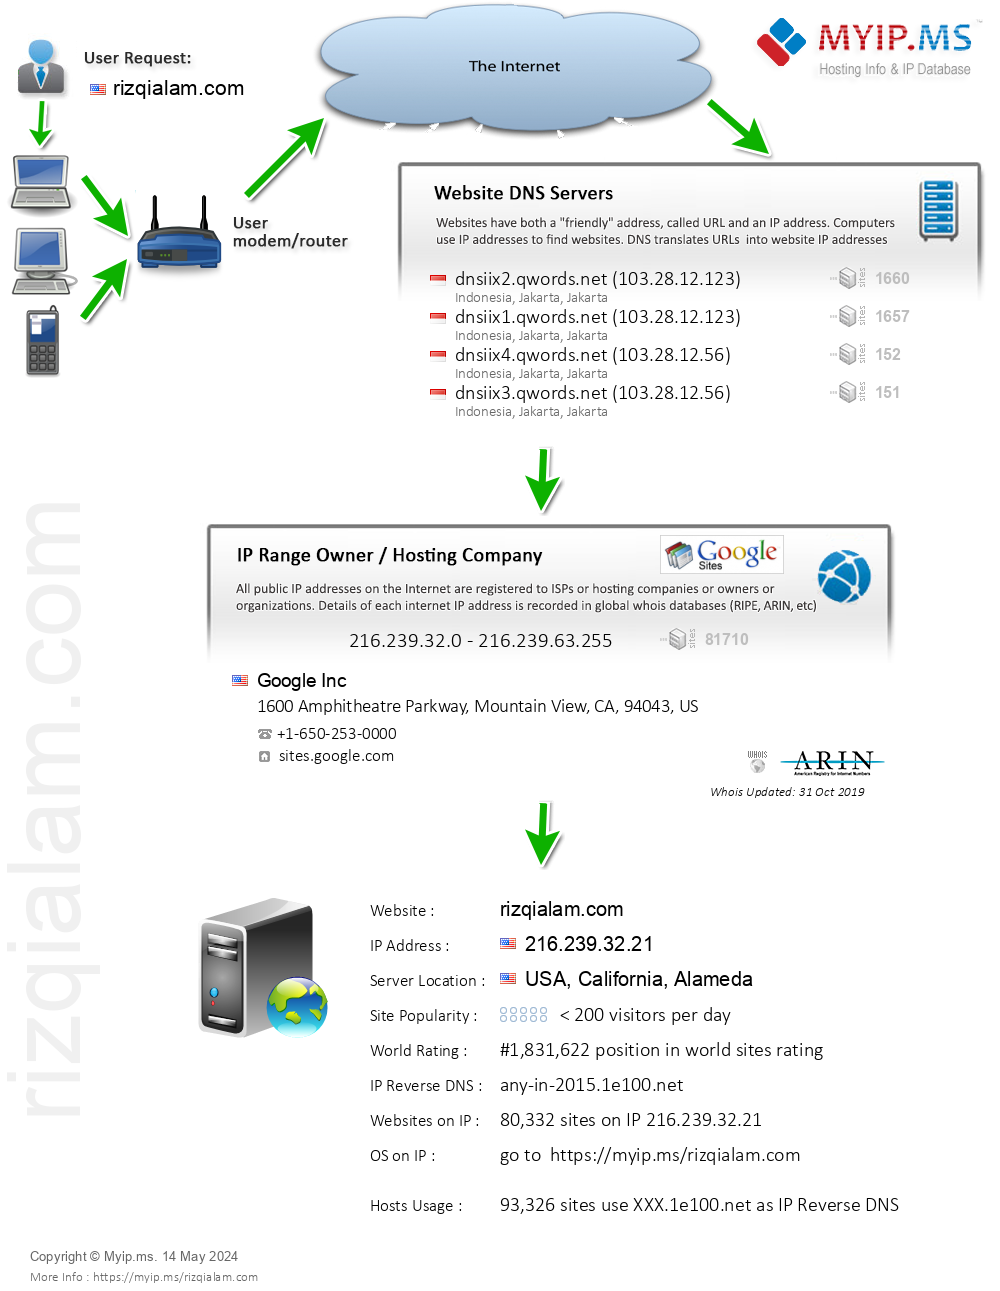 Rizqialam.com - Website Hosting Visual IP Diagram